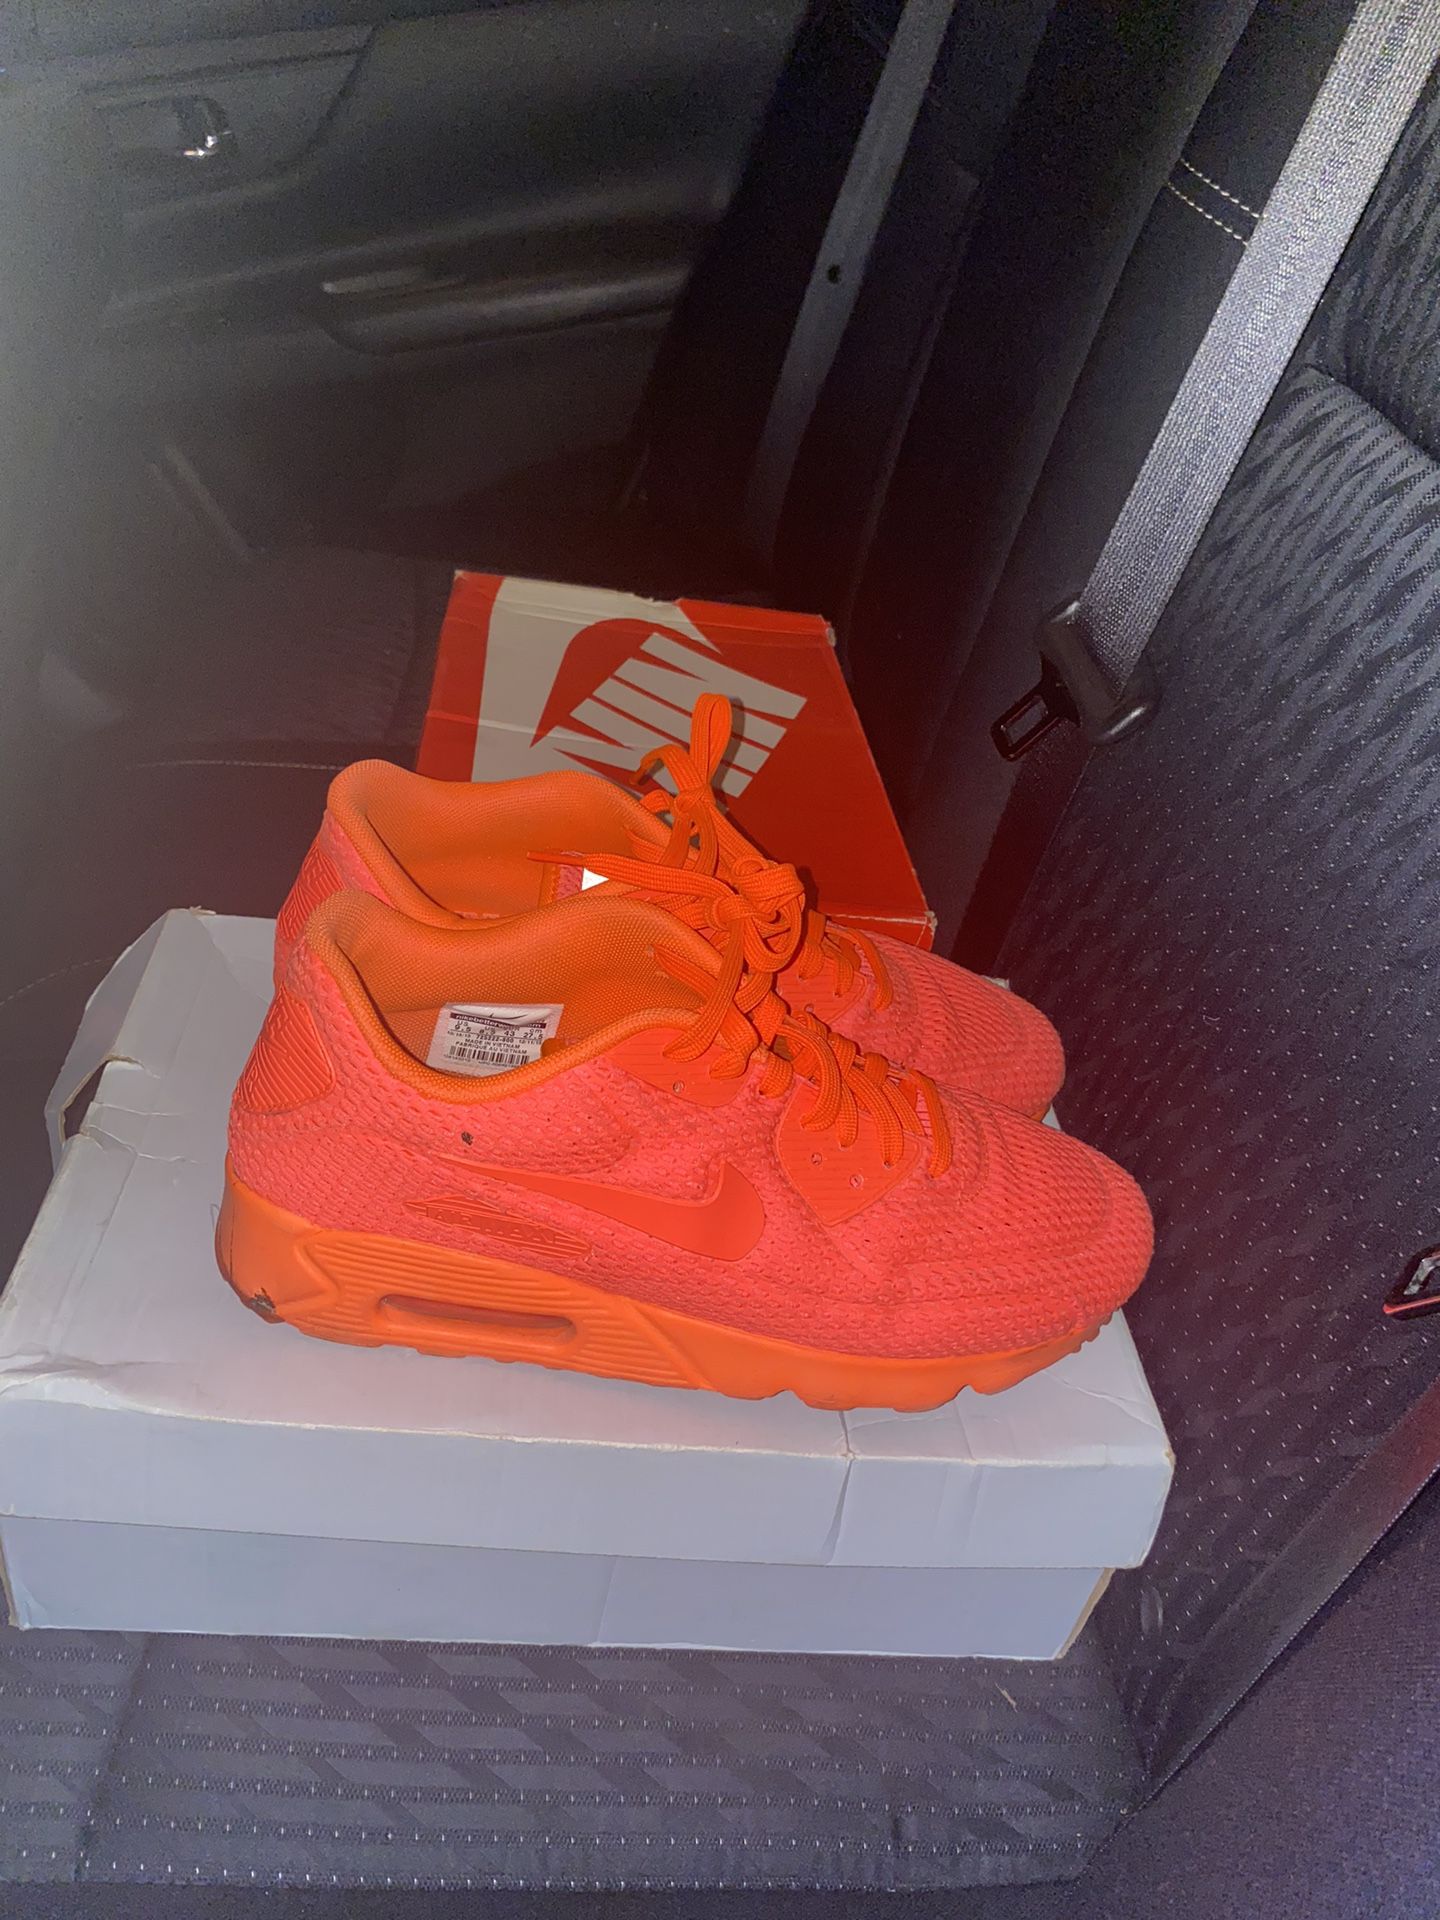 Orange Nike Air Max